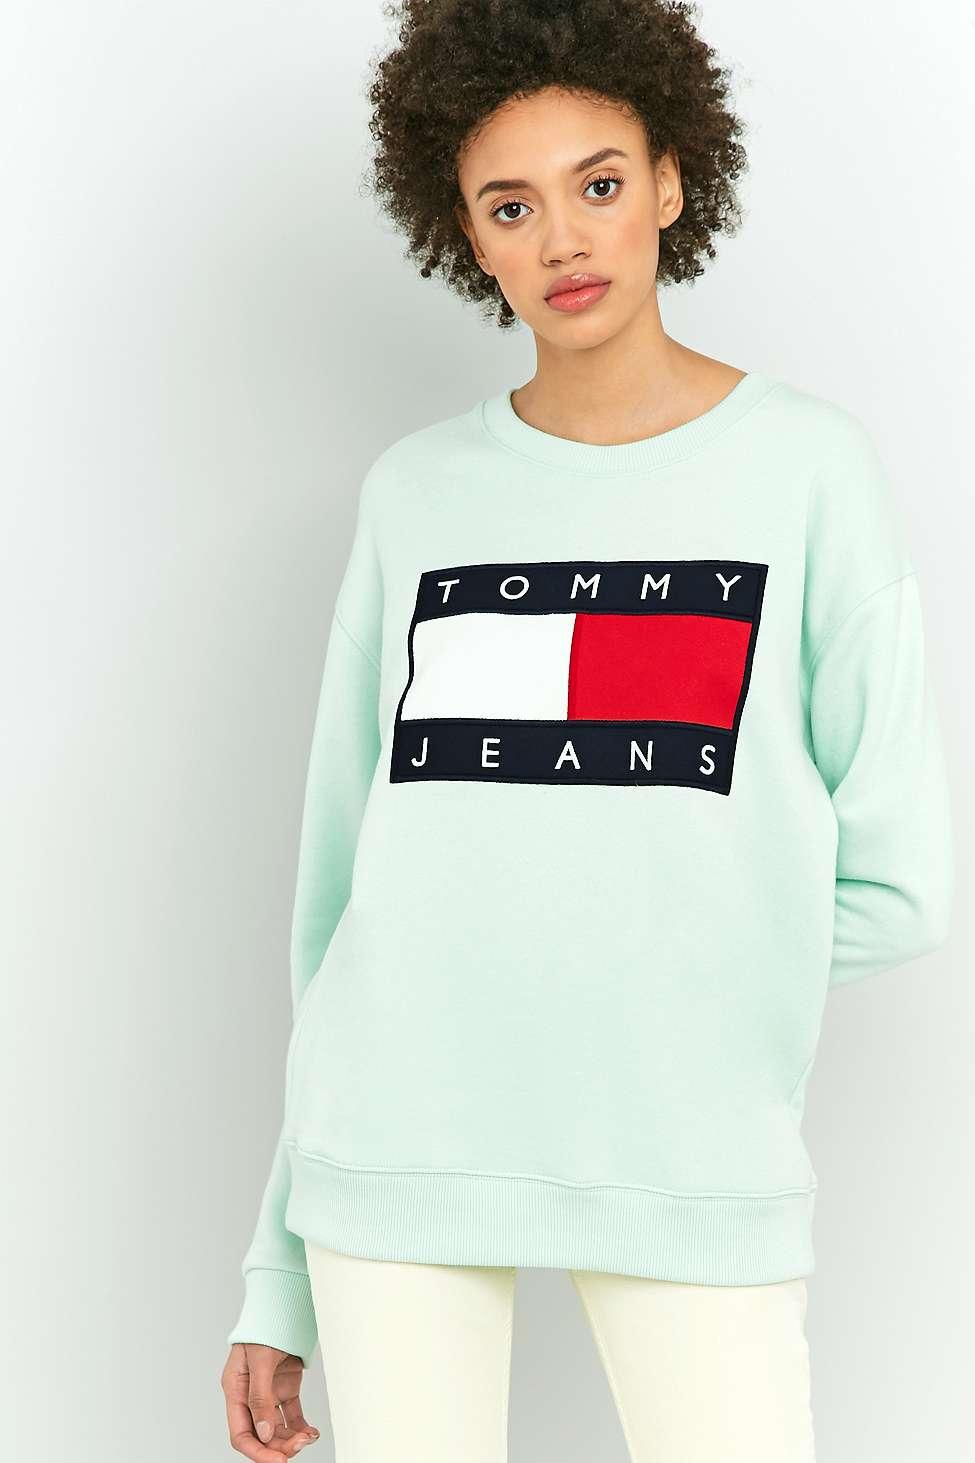 tommy hilfiger mint green sweatshirt